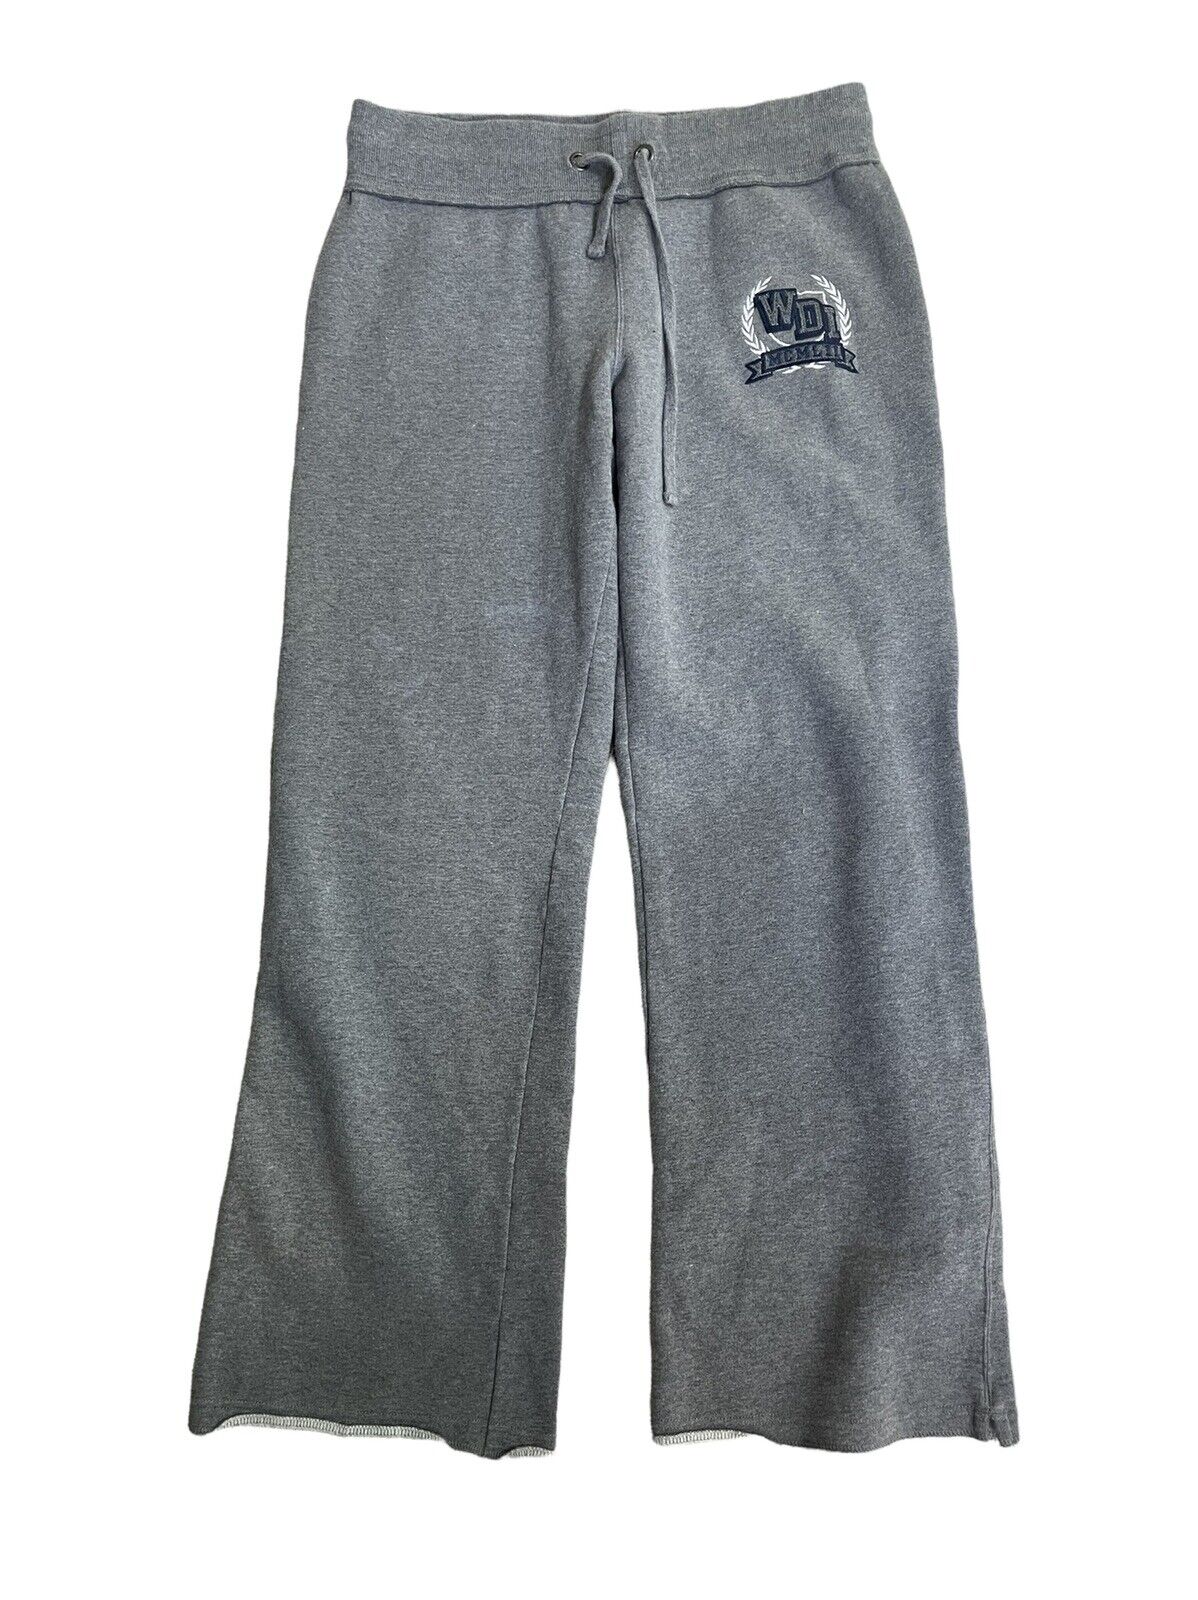 Disney Imagineering WDI Women’s Extra Large XL Sweatpants Logo Gray HTF